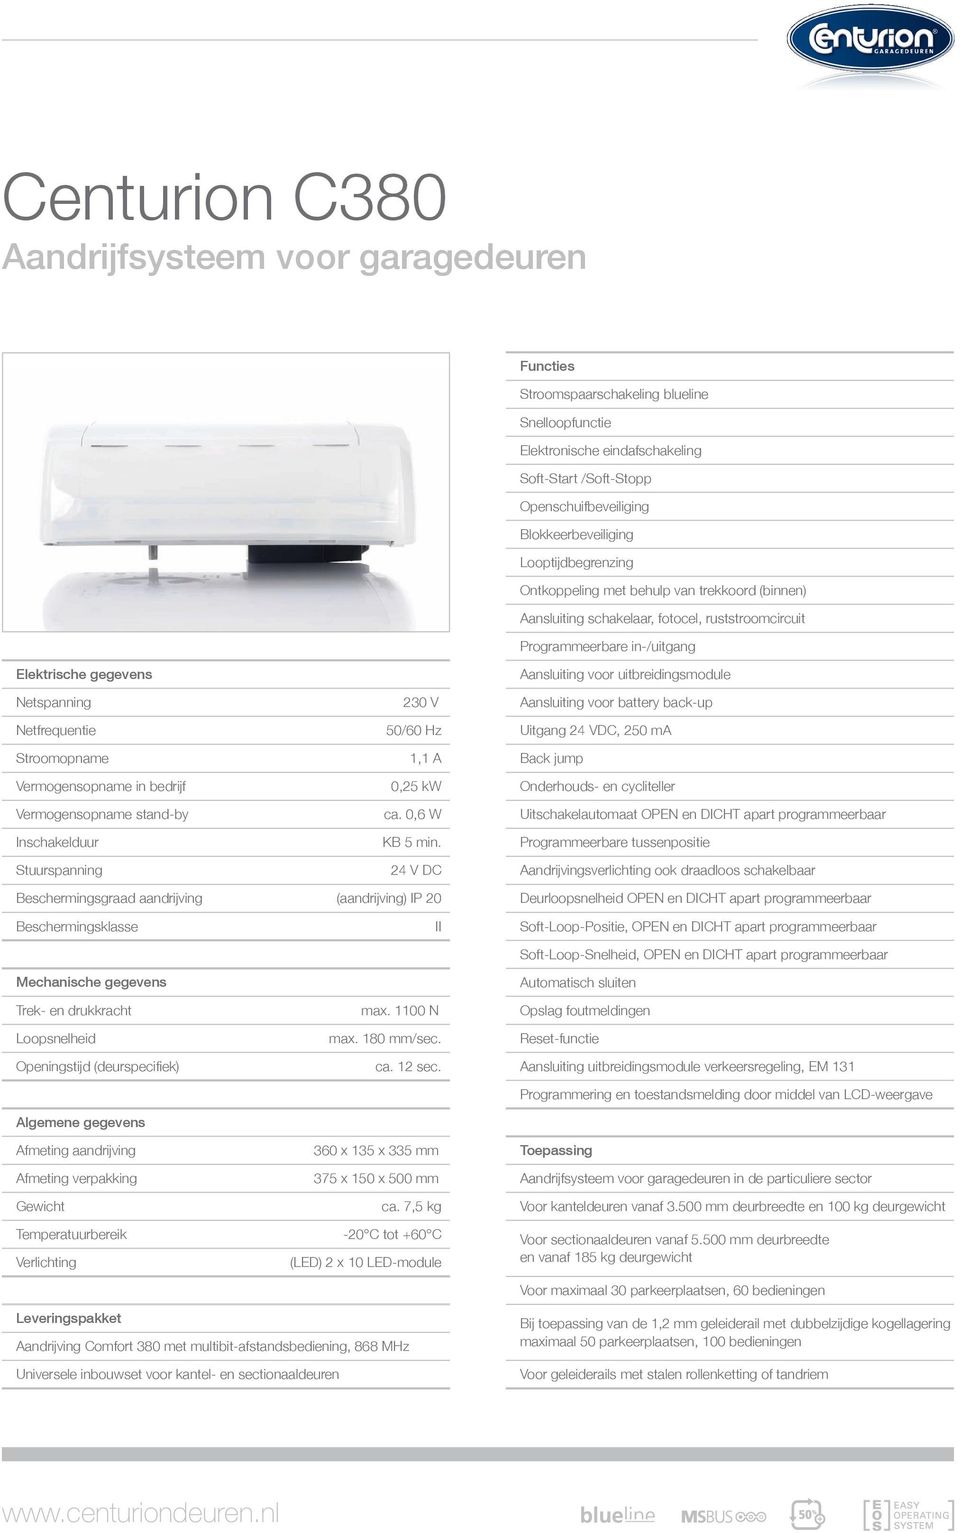 Netfrequentie Stroomopname Vermogensopname in bedrijf Vermogensopname stand-by Inschakelduur Stuurspanning 230 V 50/60 Hz 1,1 A 0,25 kw ca. 0,6 W KB 5 min.